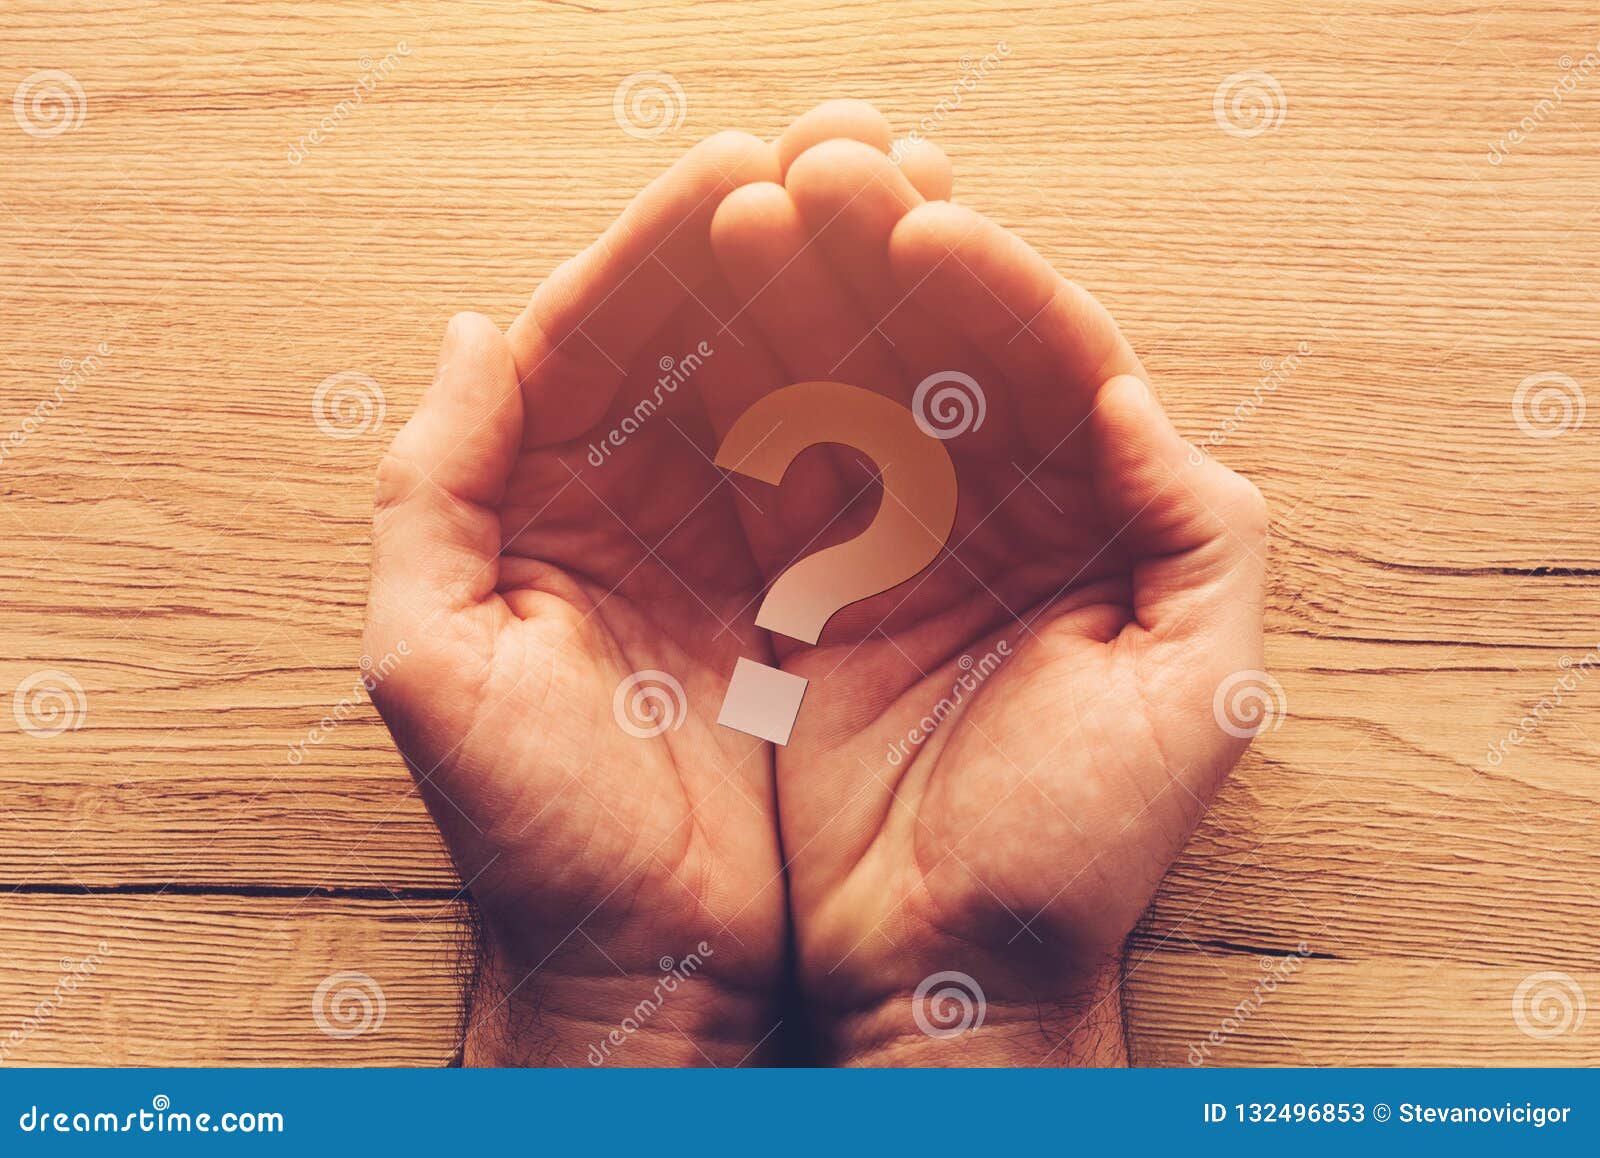 Знак вопроса на руке. Знак вопроса в руках. Вопросительный знак на ладони. Рука вопрос. Рука в виде знака вопроса.